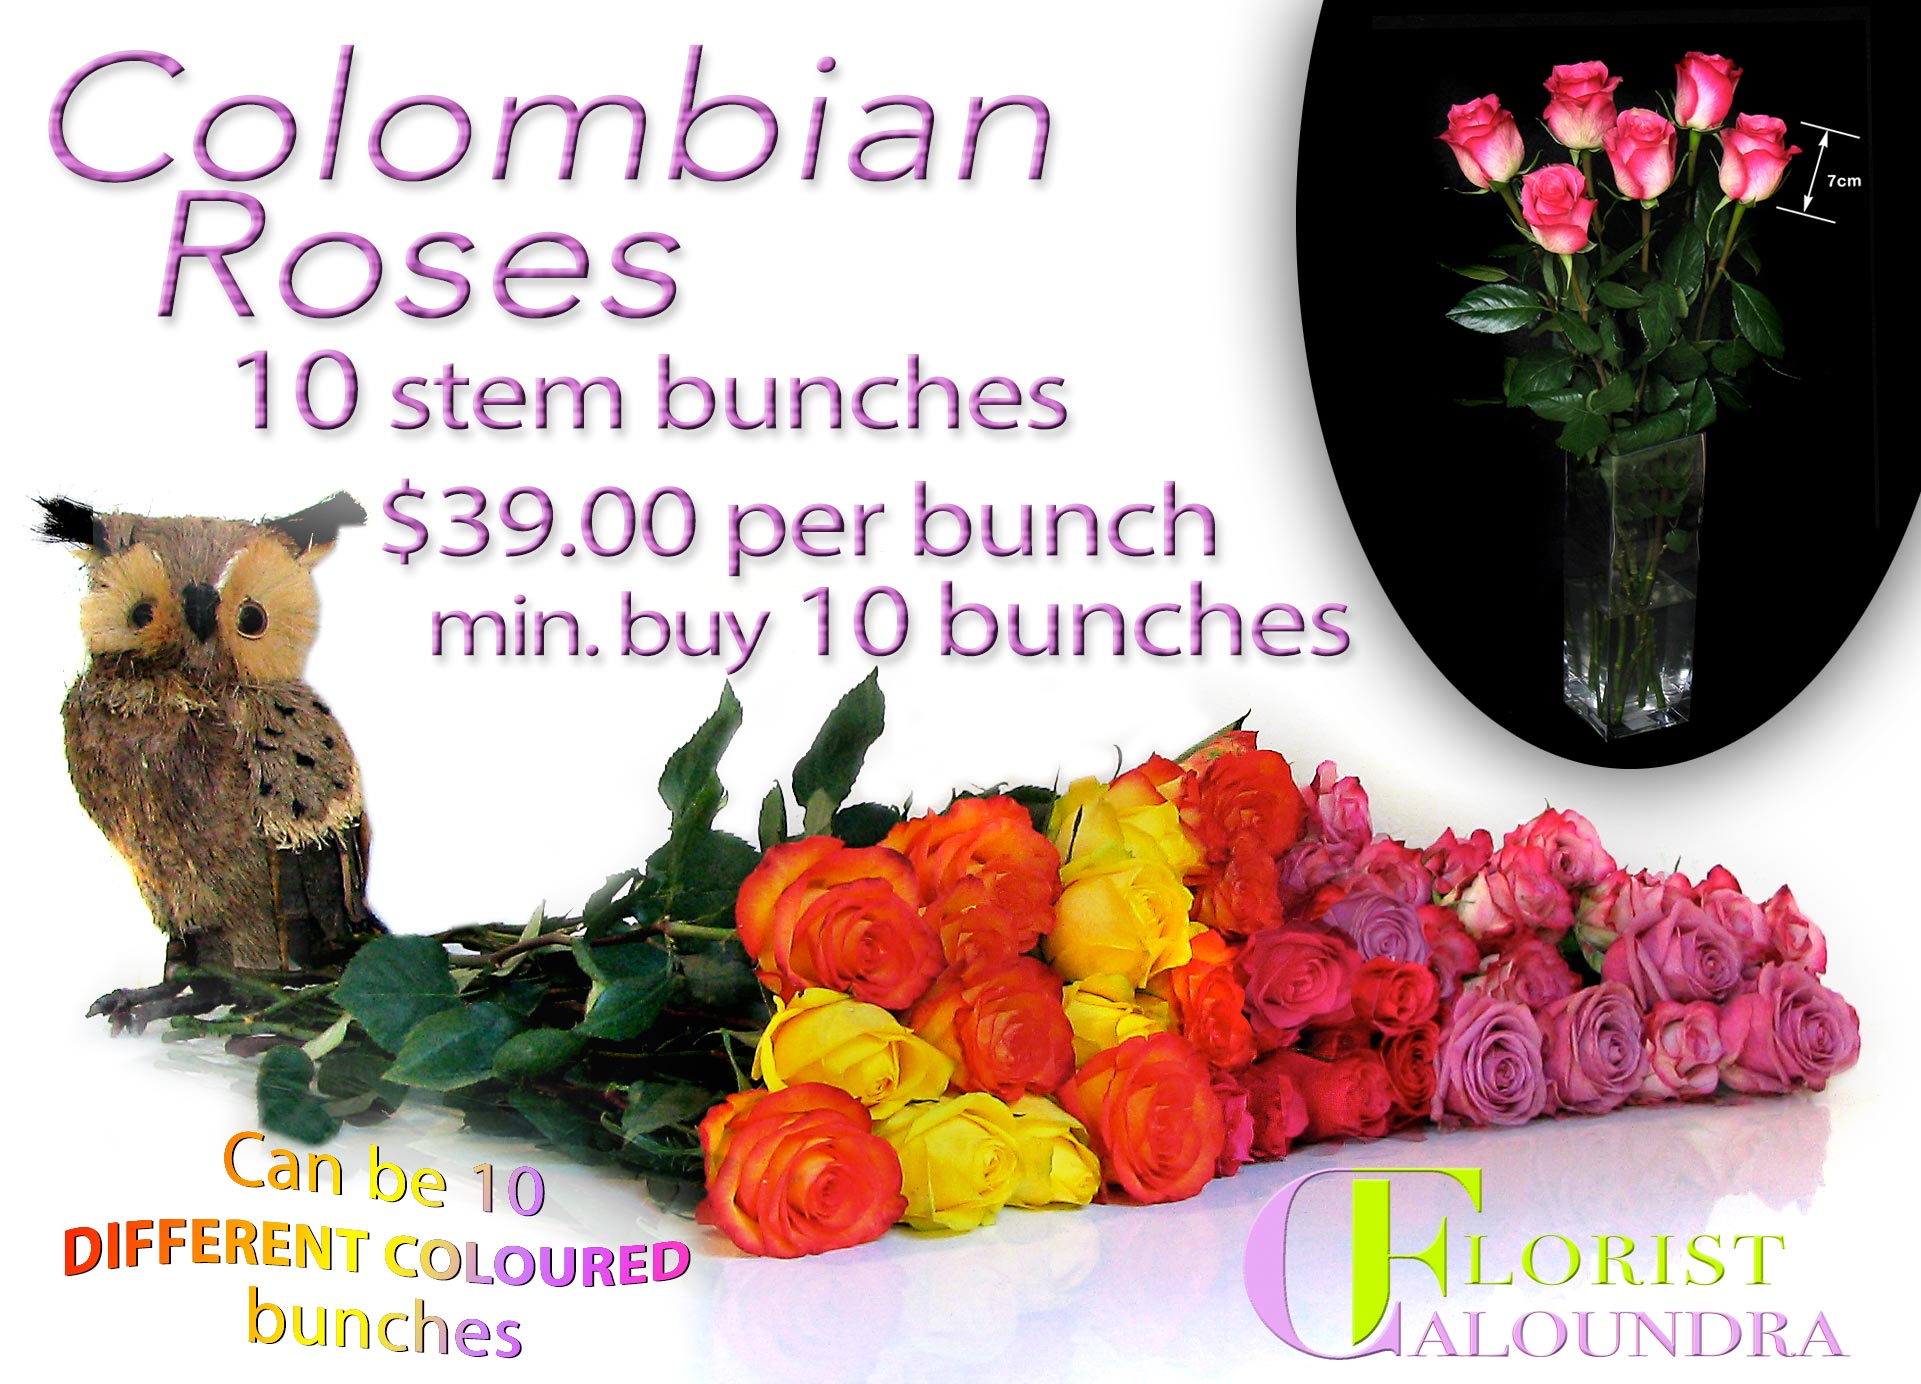 COLOMBIAN ROSES CALOUNDRA FLORIST